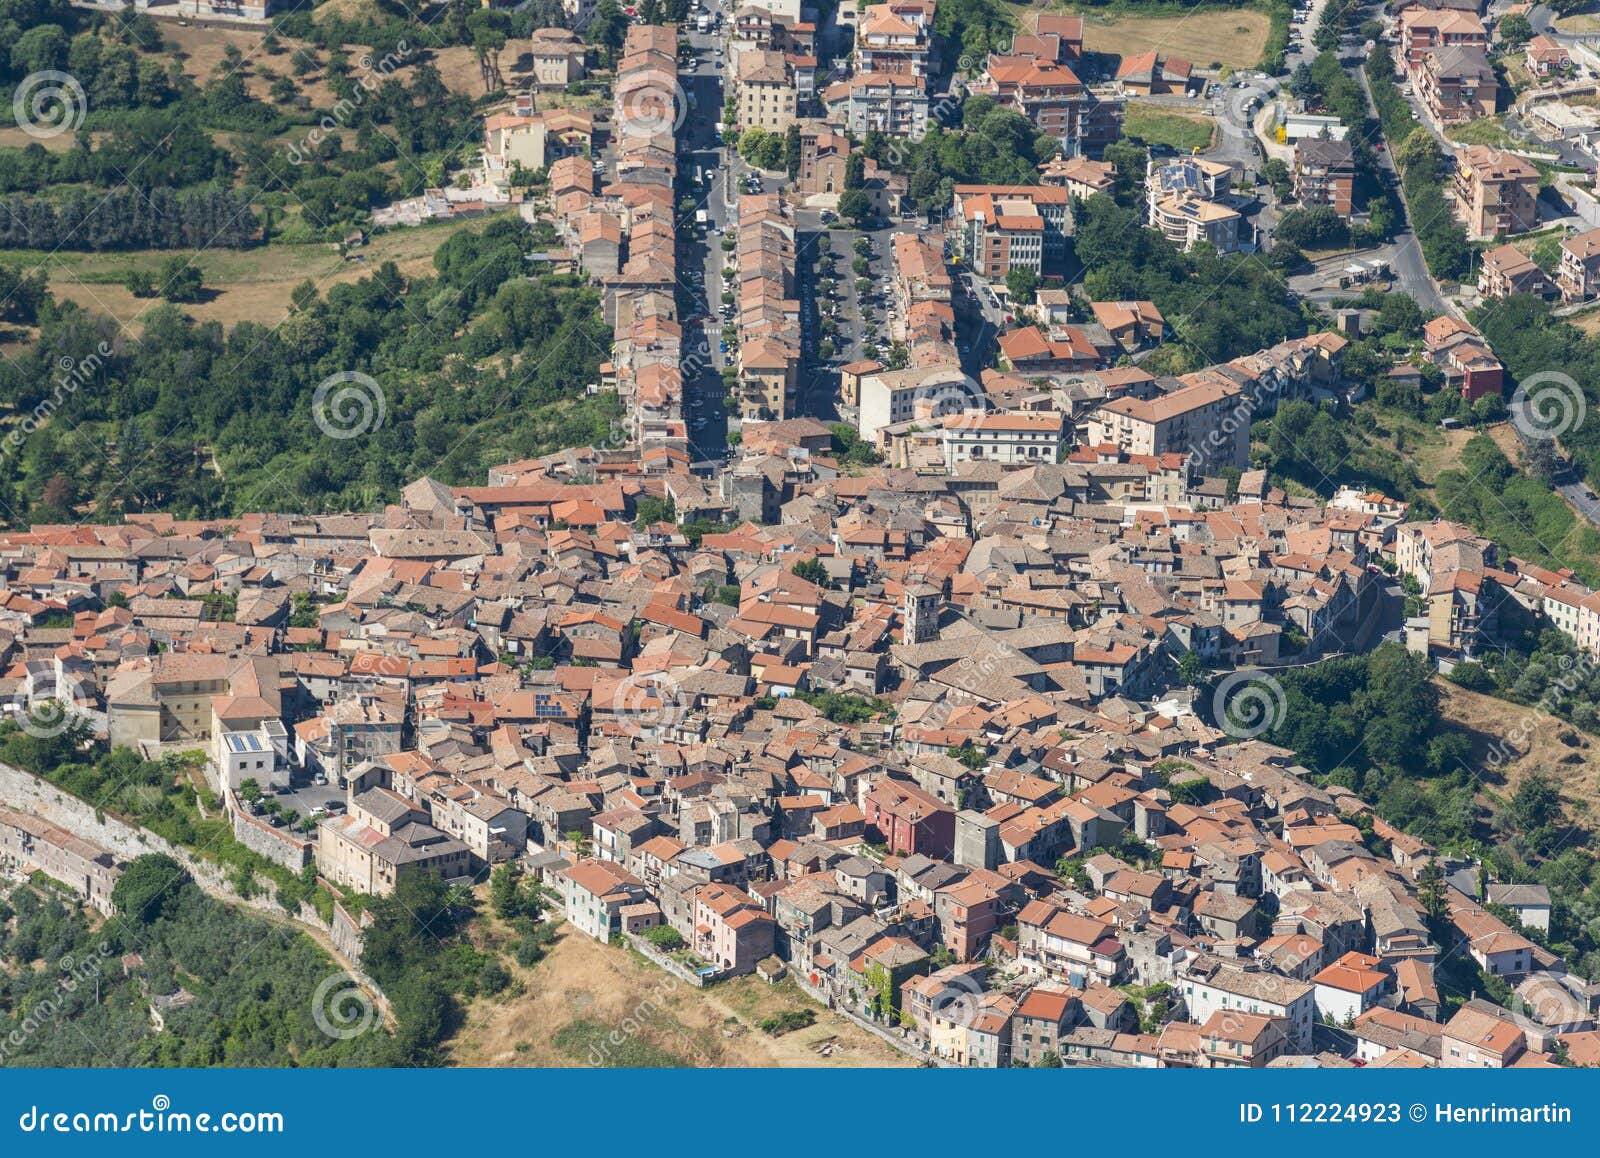 aerial image of the village of segni in lazio region